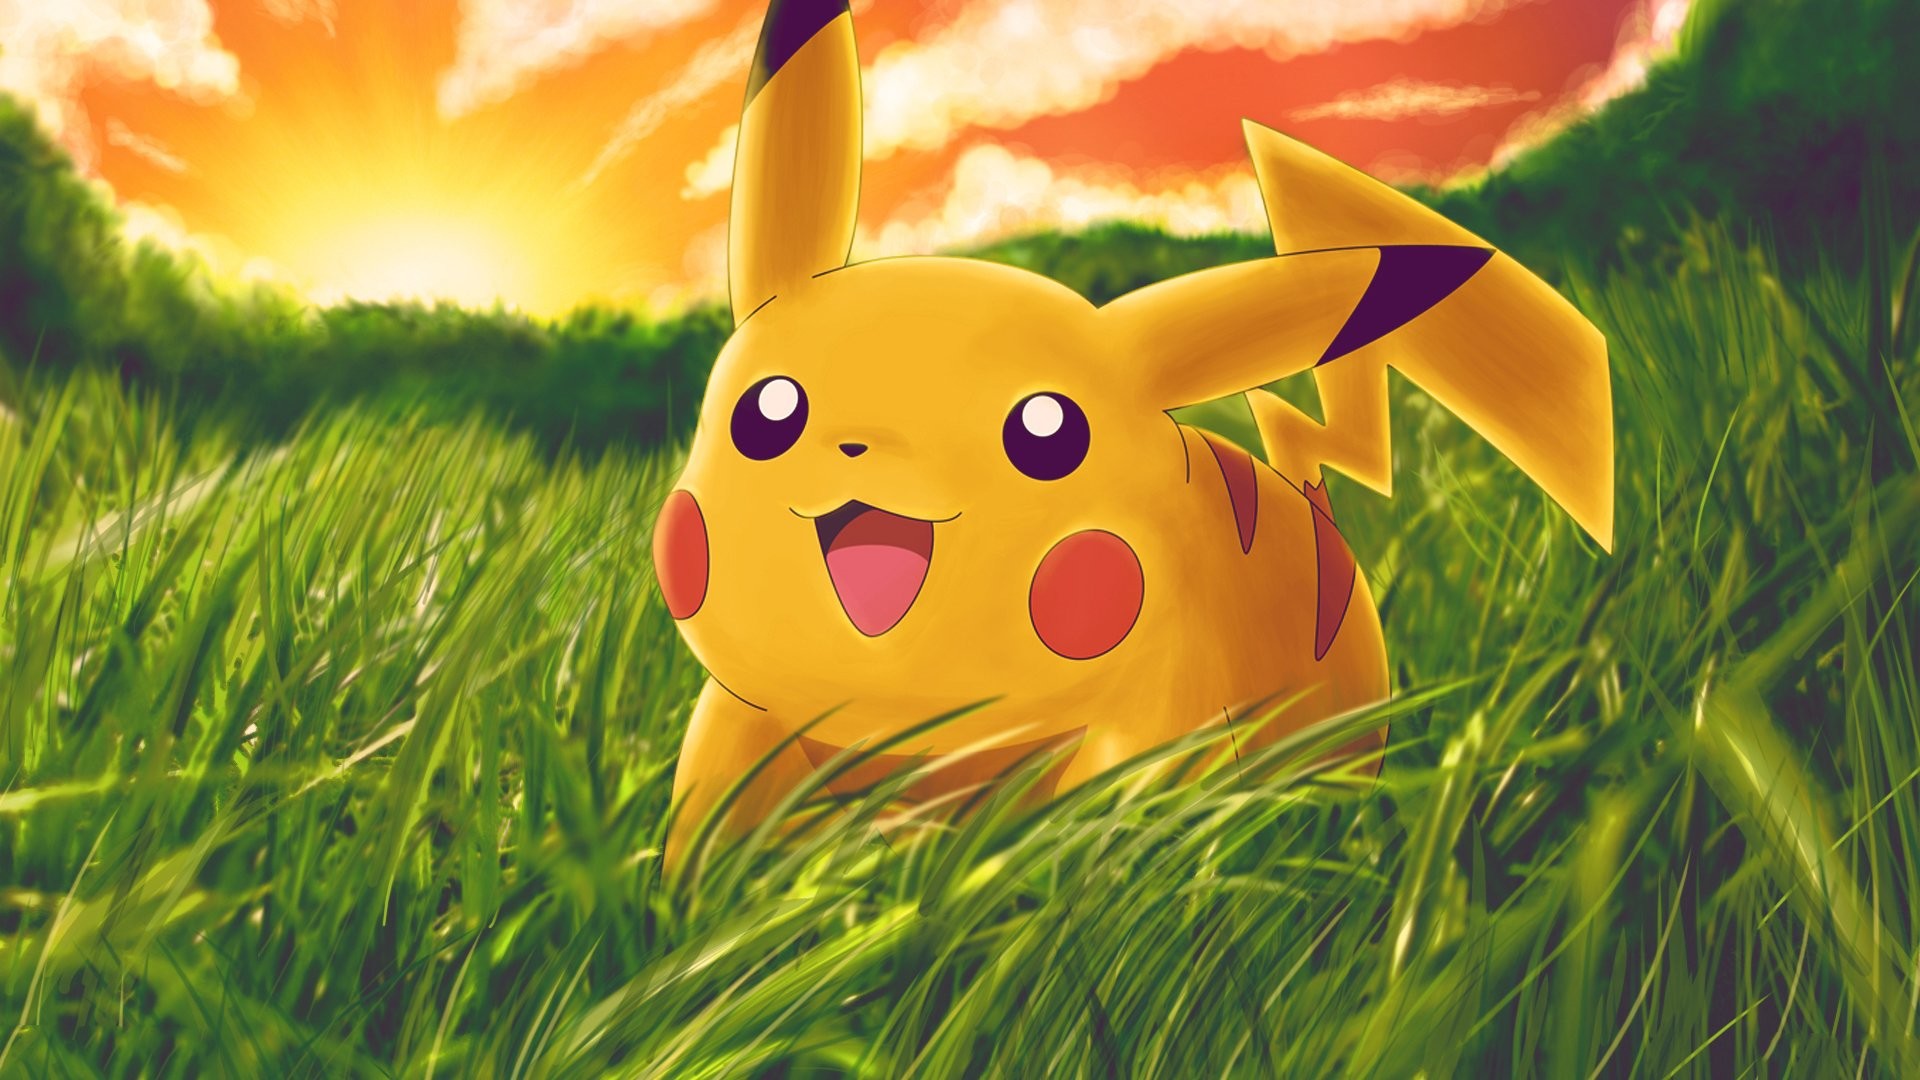 Pokemon wallpaper 1920x1080 pikachu in the grass - Pikachu